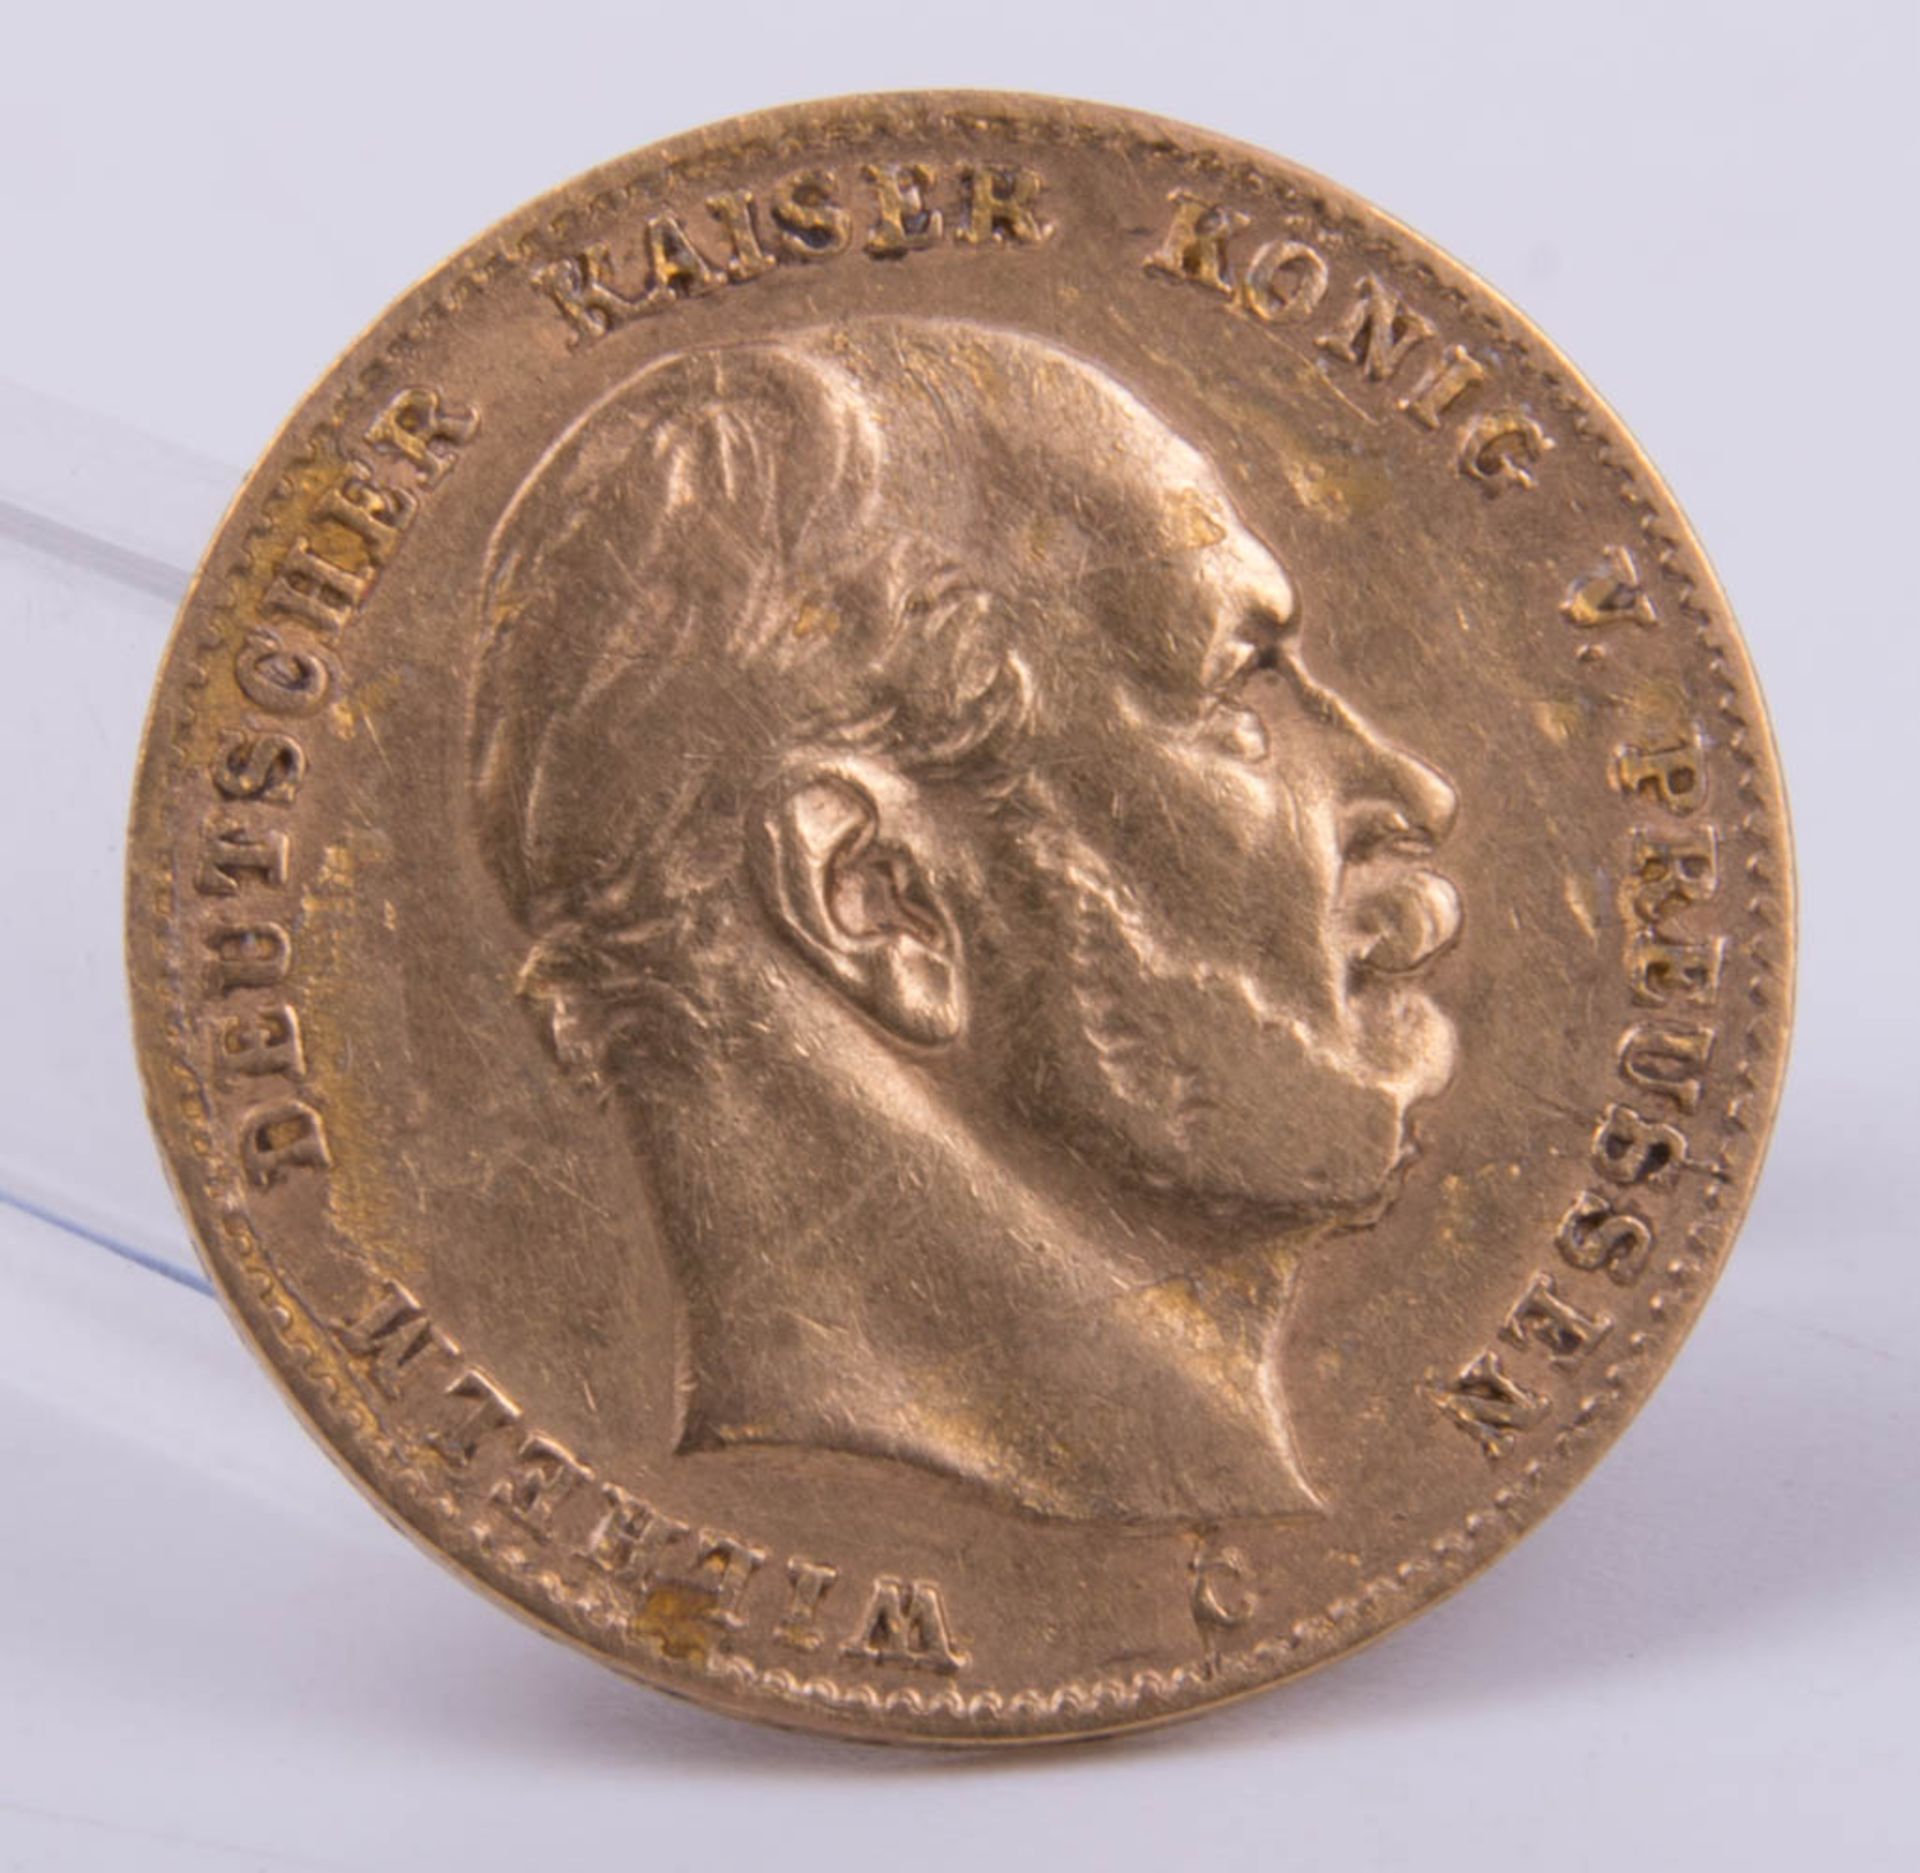 Goldmünze 10 Mark 1875, Kaiser Willhelm I.